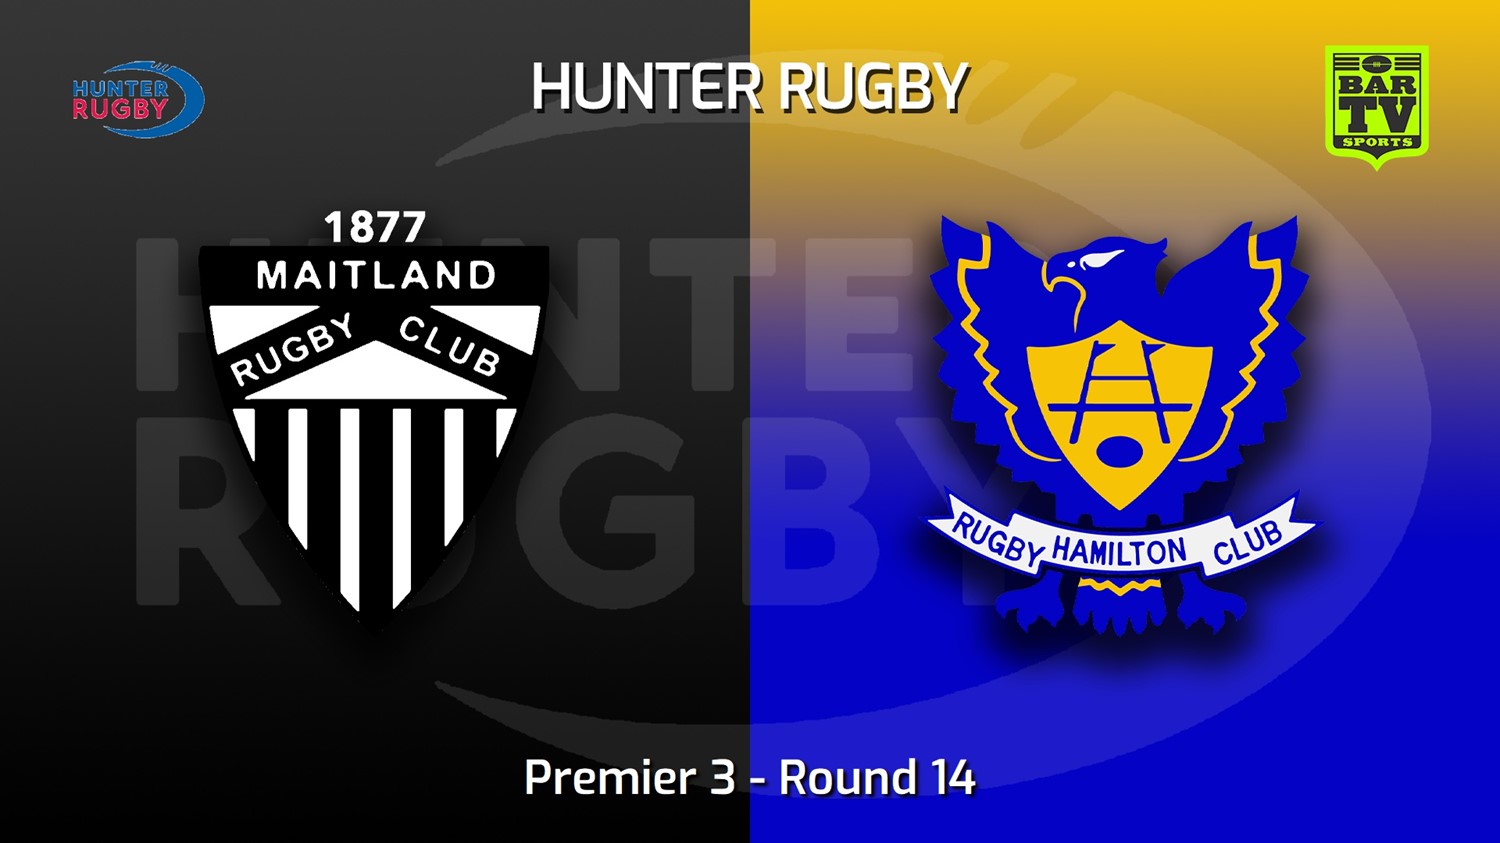 220730-Hunter Rugby Round 14 - Premier 3 - Maitland v Hamilton Hawks Slate Image